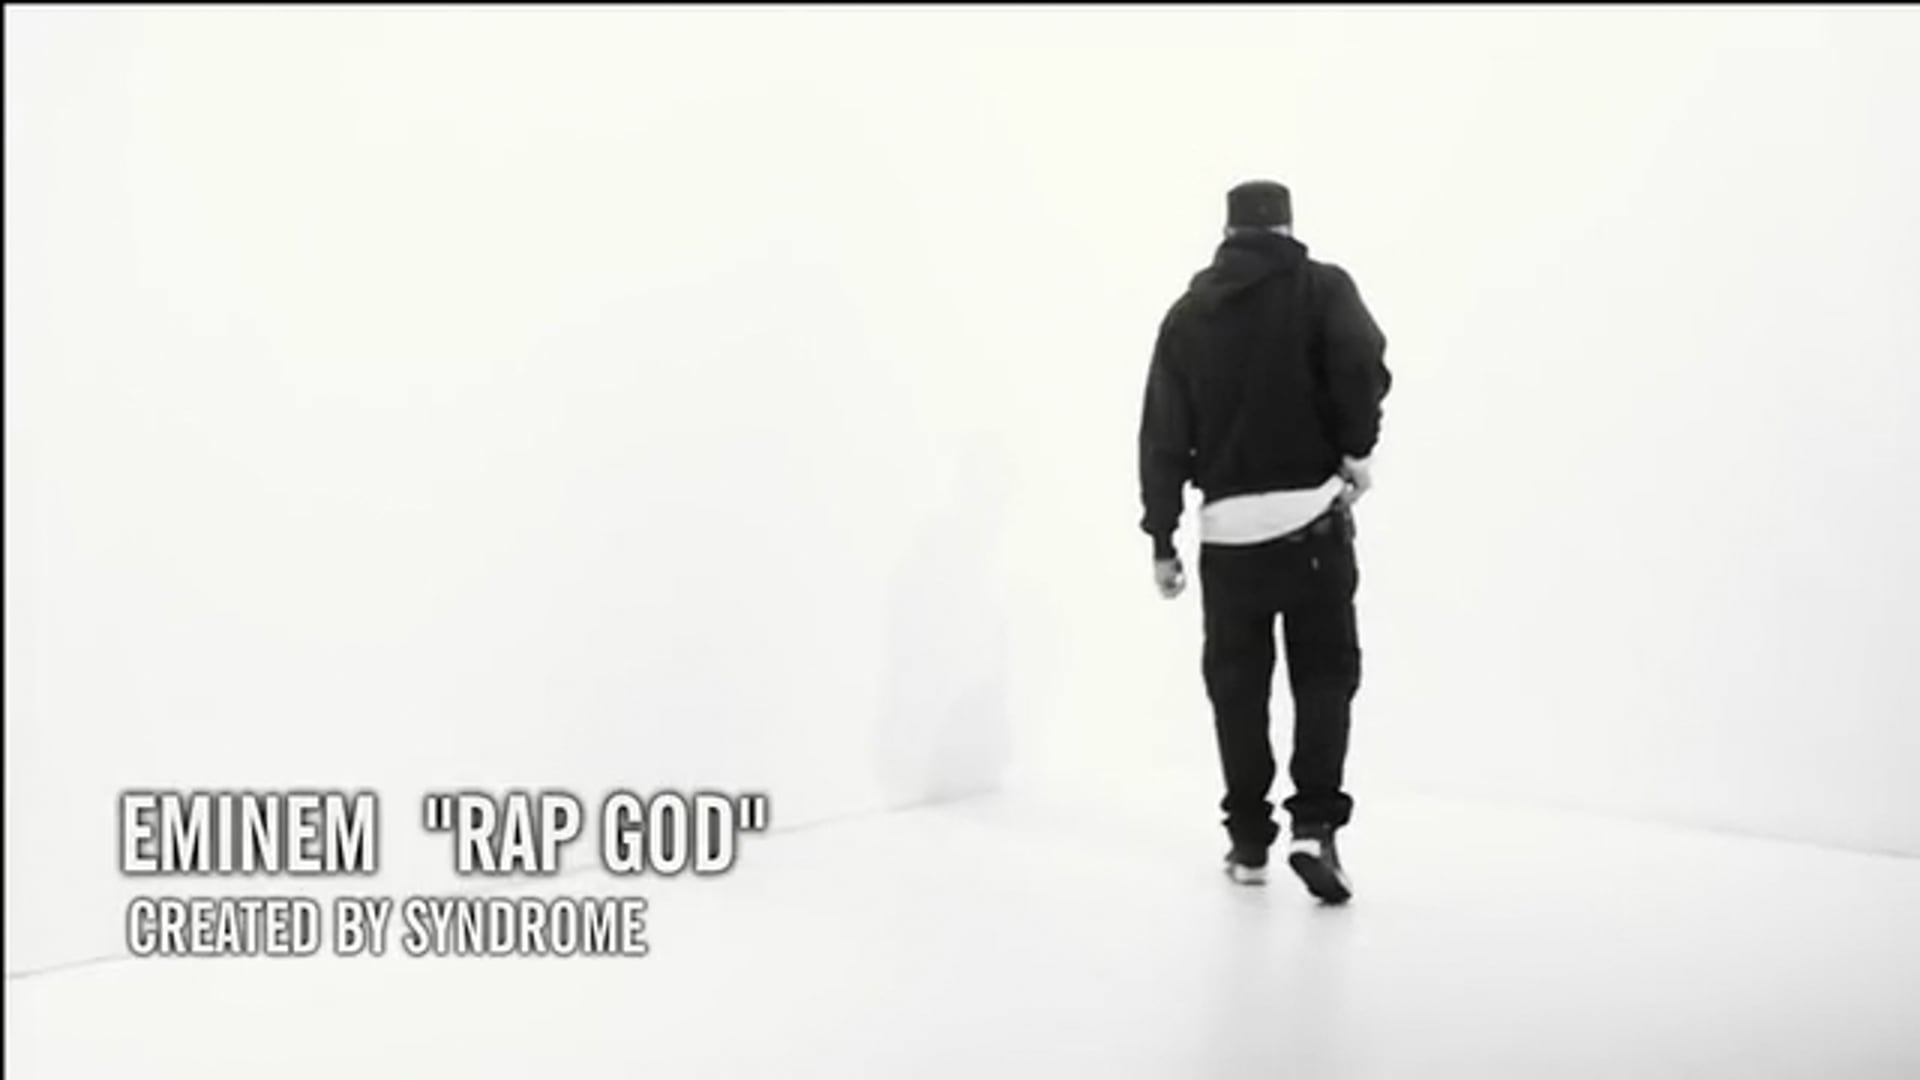 Eminem "Rap God"